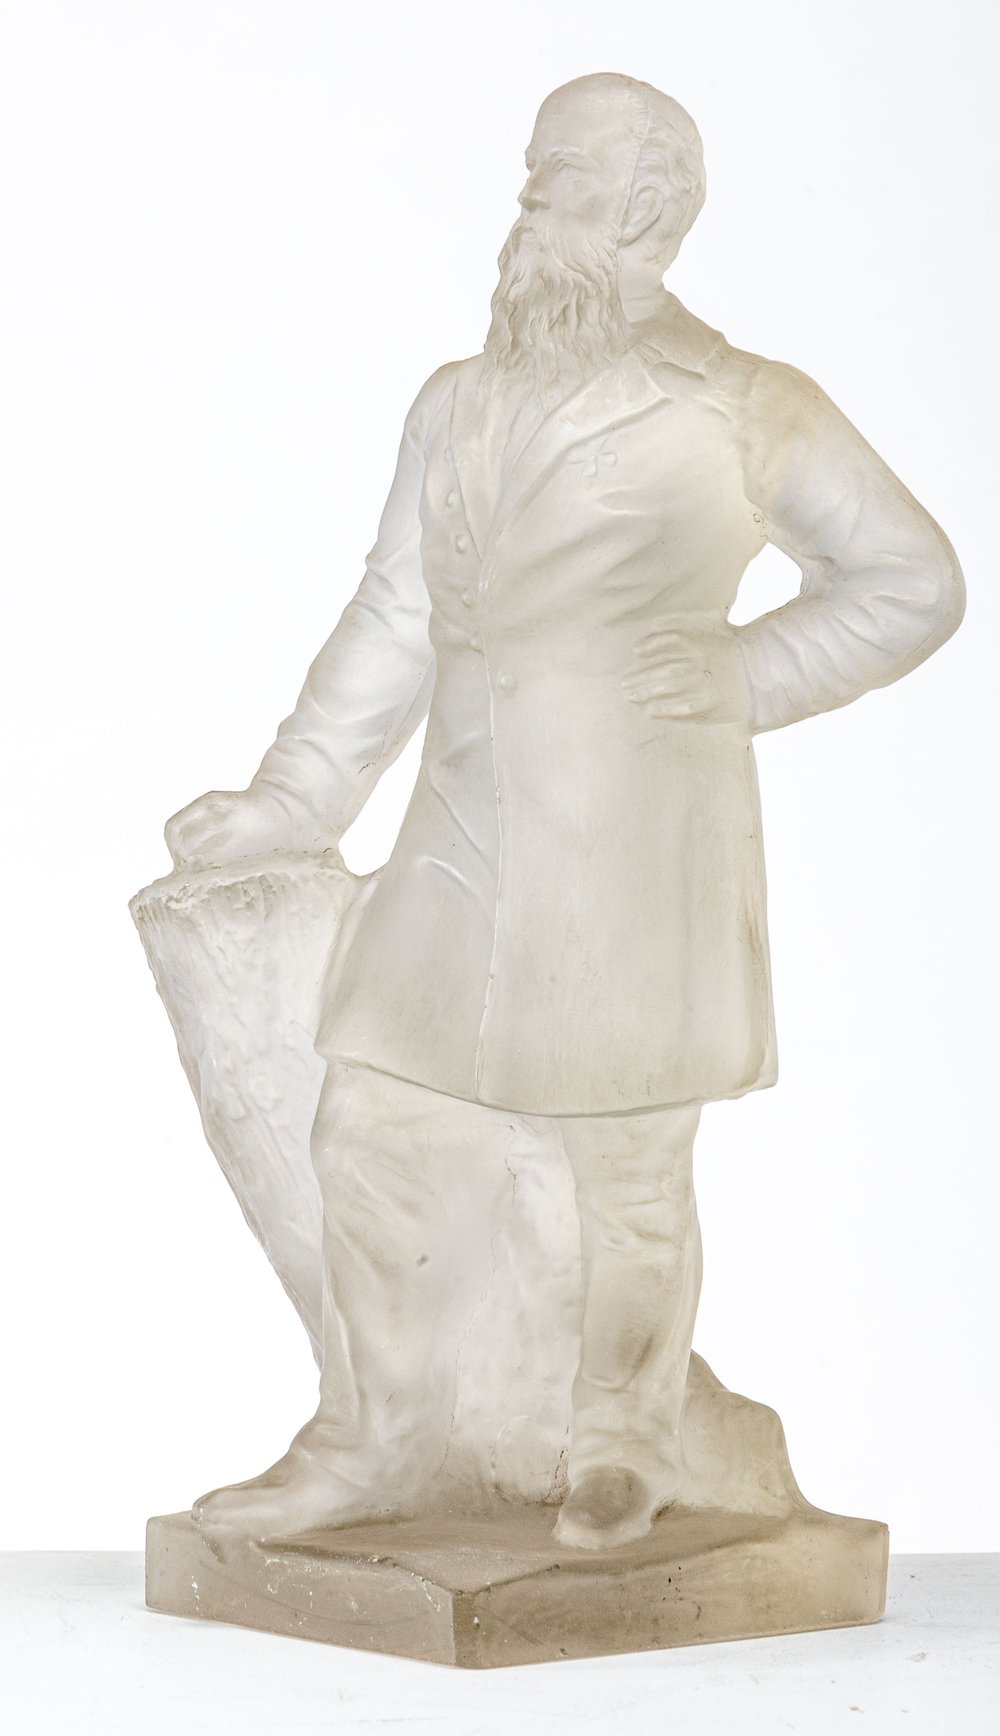 Statuette des Friedrich Ludwig Jahn Wohl Josef Riedel, Polaun, um 1878 - Image 2 of 2